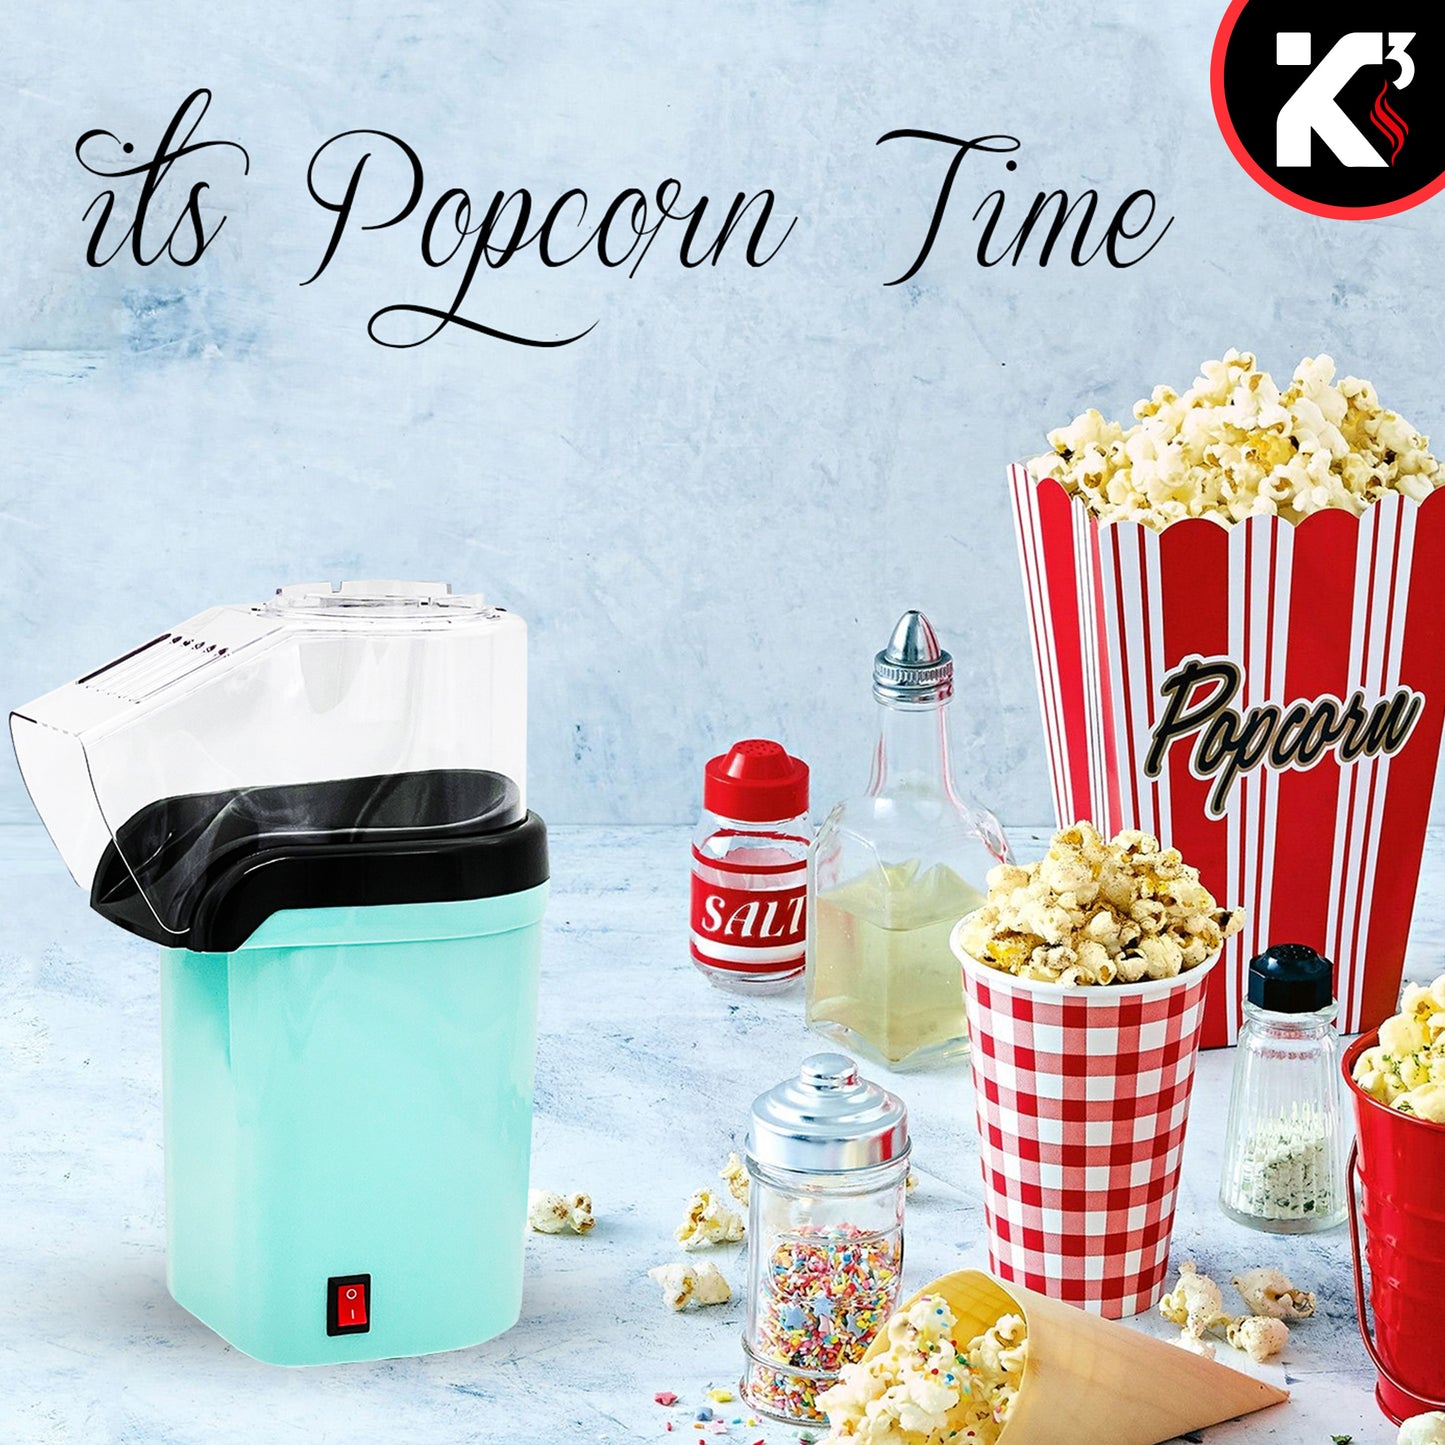 Kcubeinc Popcorn Machine Hot Air Electric Popper Kernel Corn Maker Bpa Free No Oil POP G